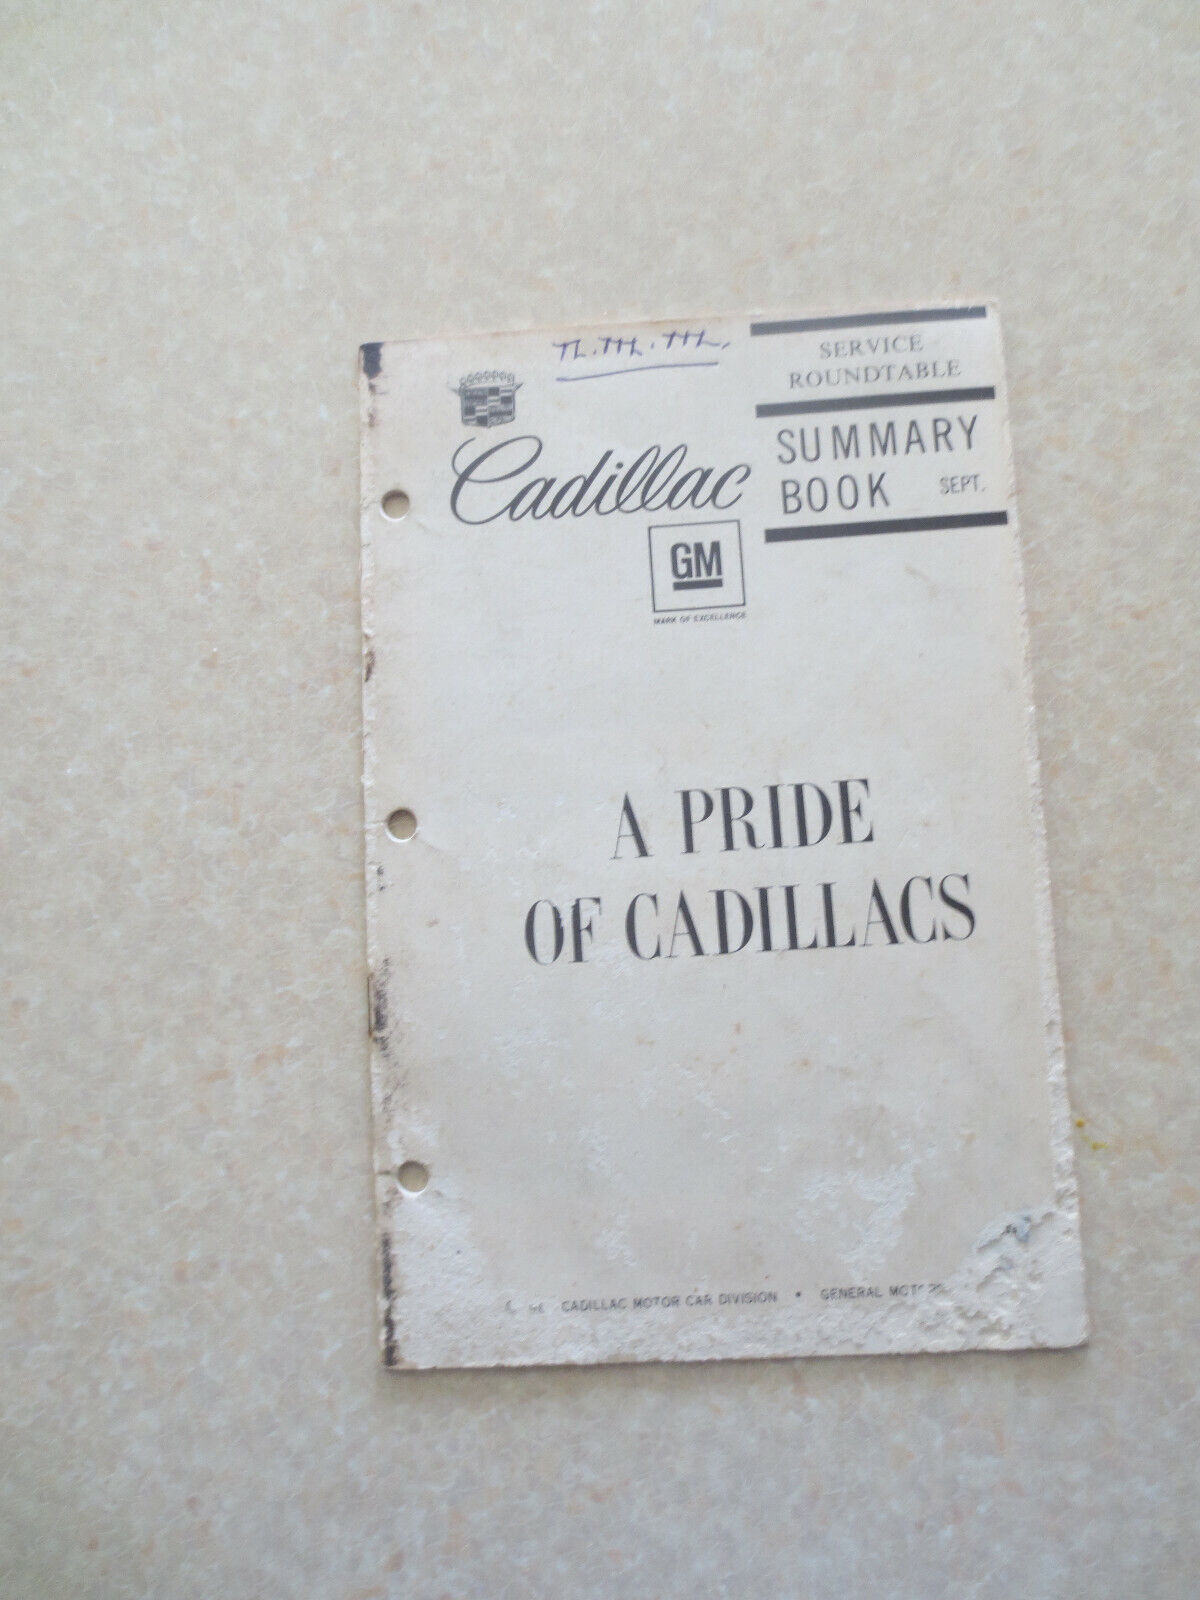 1968 Cadillac car service summary booklet --